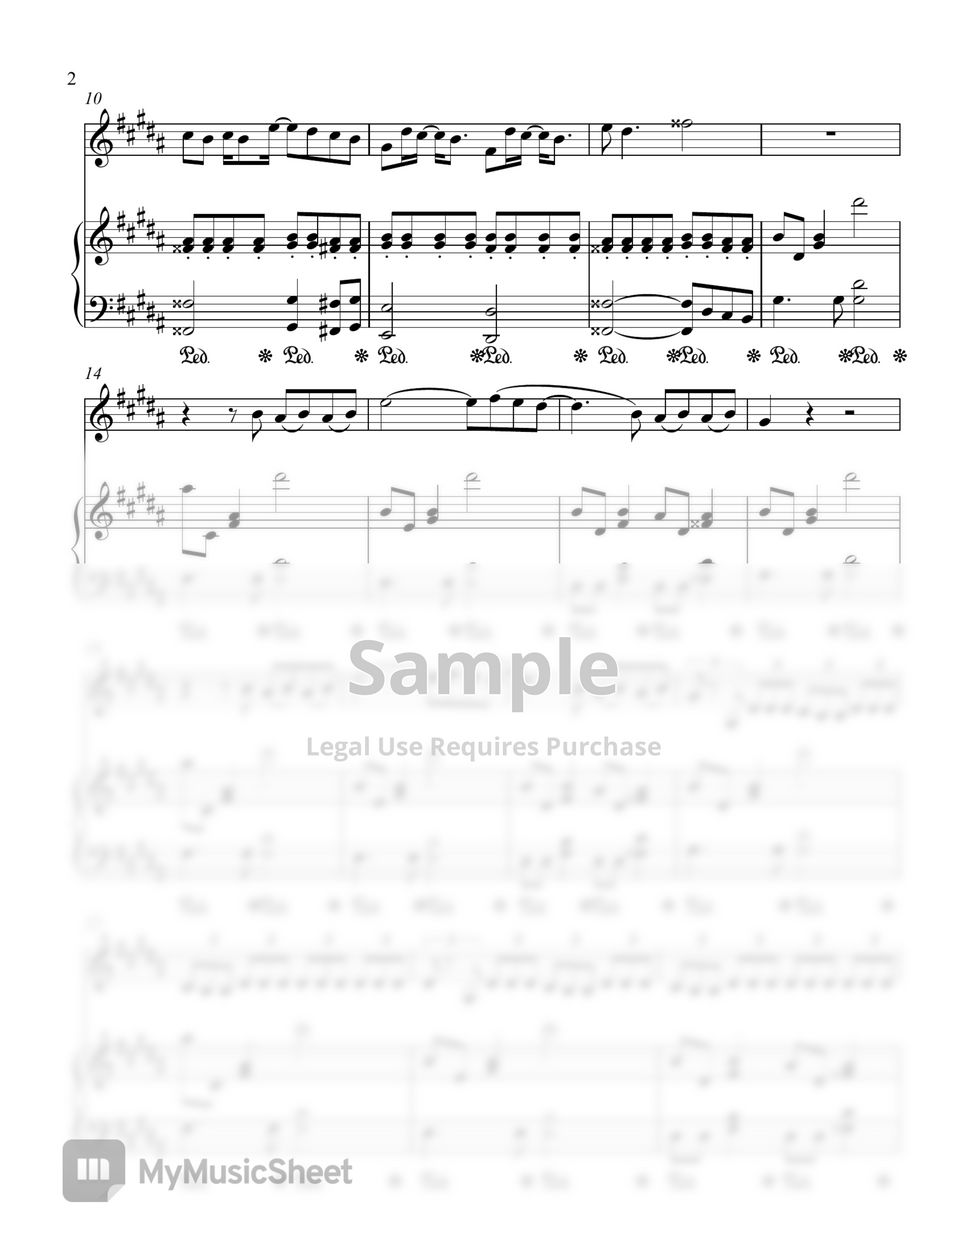 Viola Toxic – BoyWithUke Sheet music for Piano, Viola (Solo)